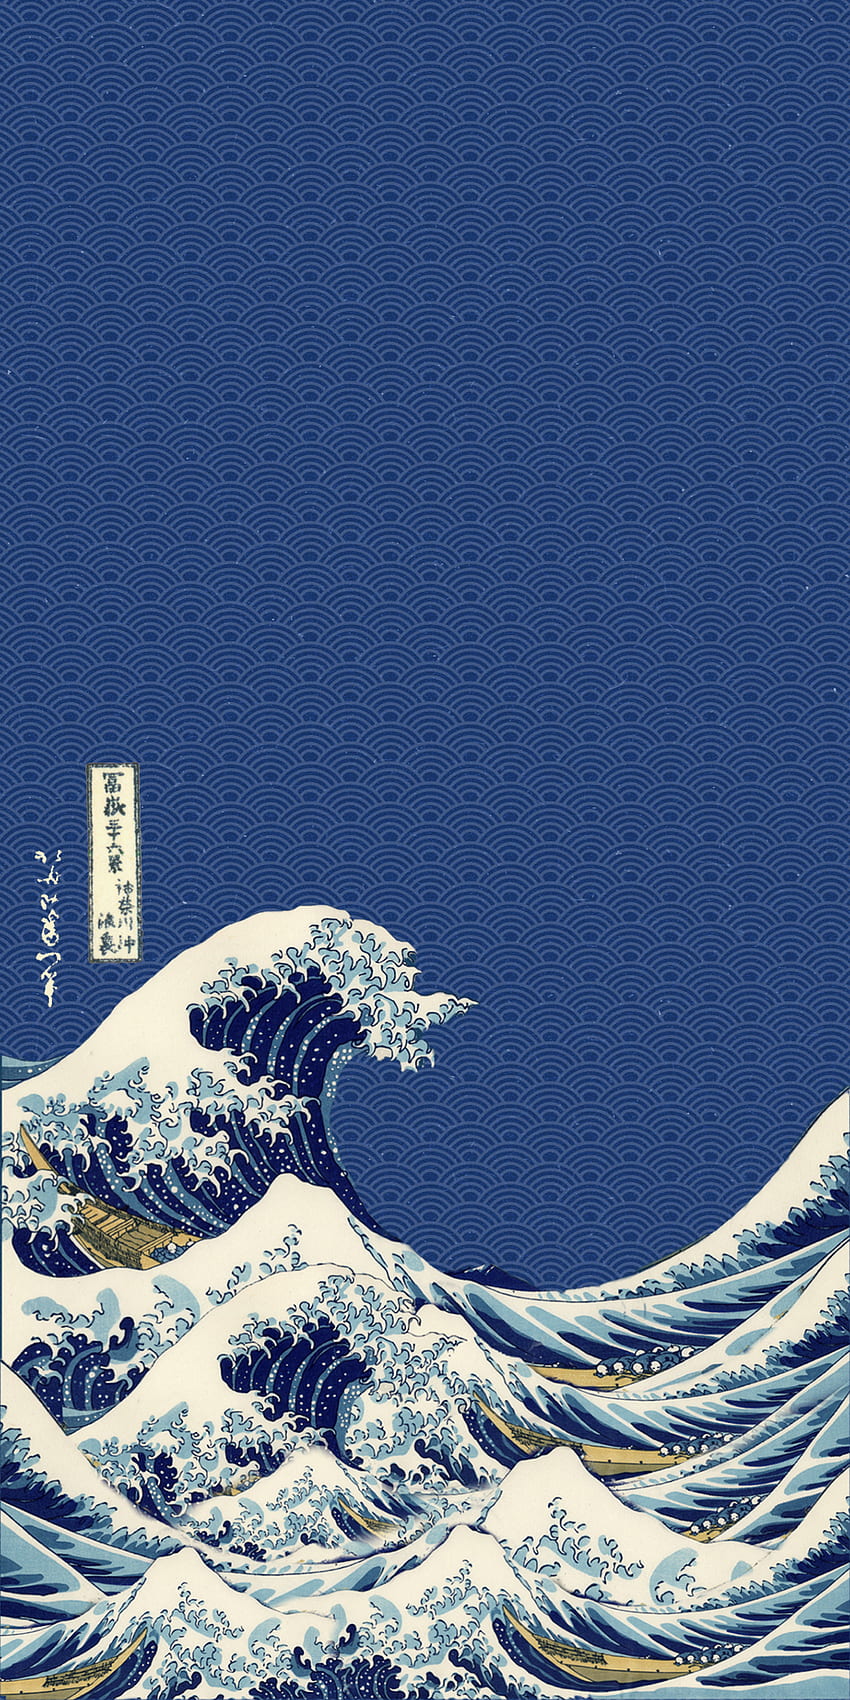 My Edit Of U ThatOneEnemy's Of Hokusai's The Great Wave: Vertical, Run With the Wind Papel de parede de celular HD